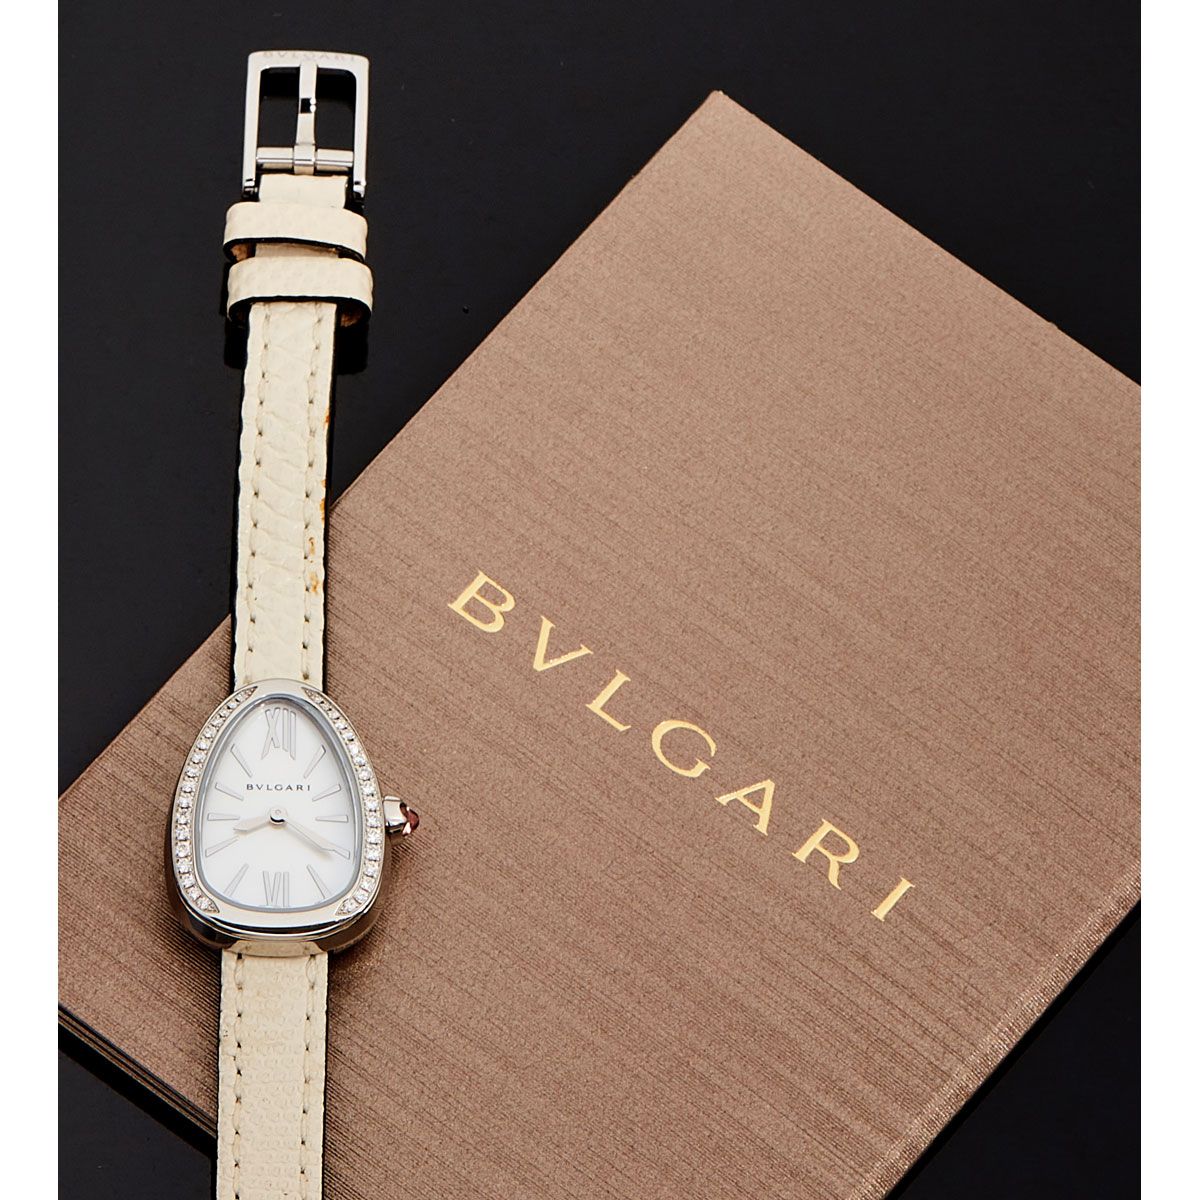 Null Bvlgari, Serpenti 27mm, circa 2020


A jewel watch in steel, snake-shaped, &hellip;